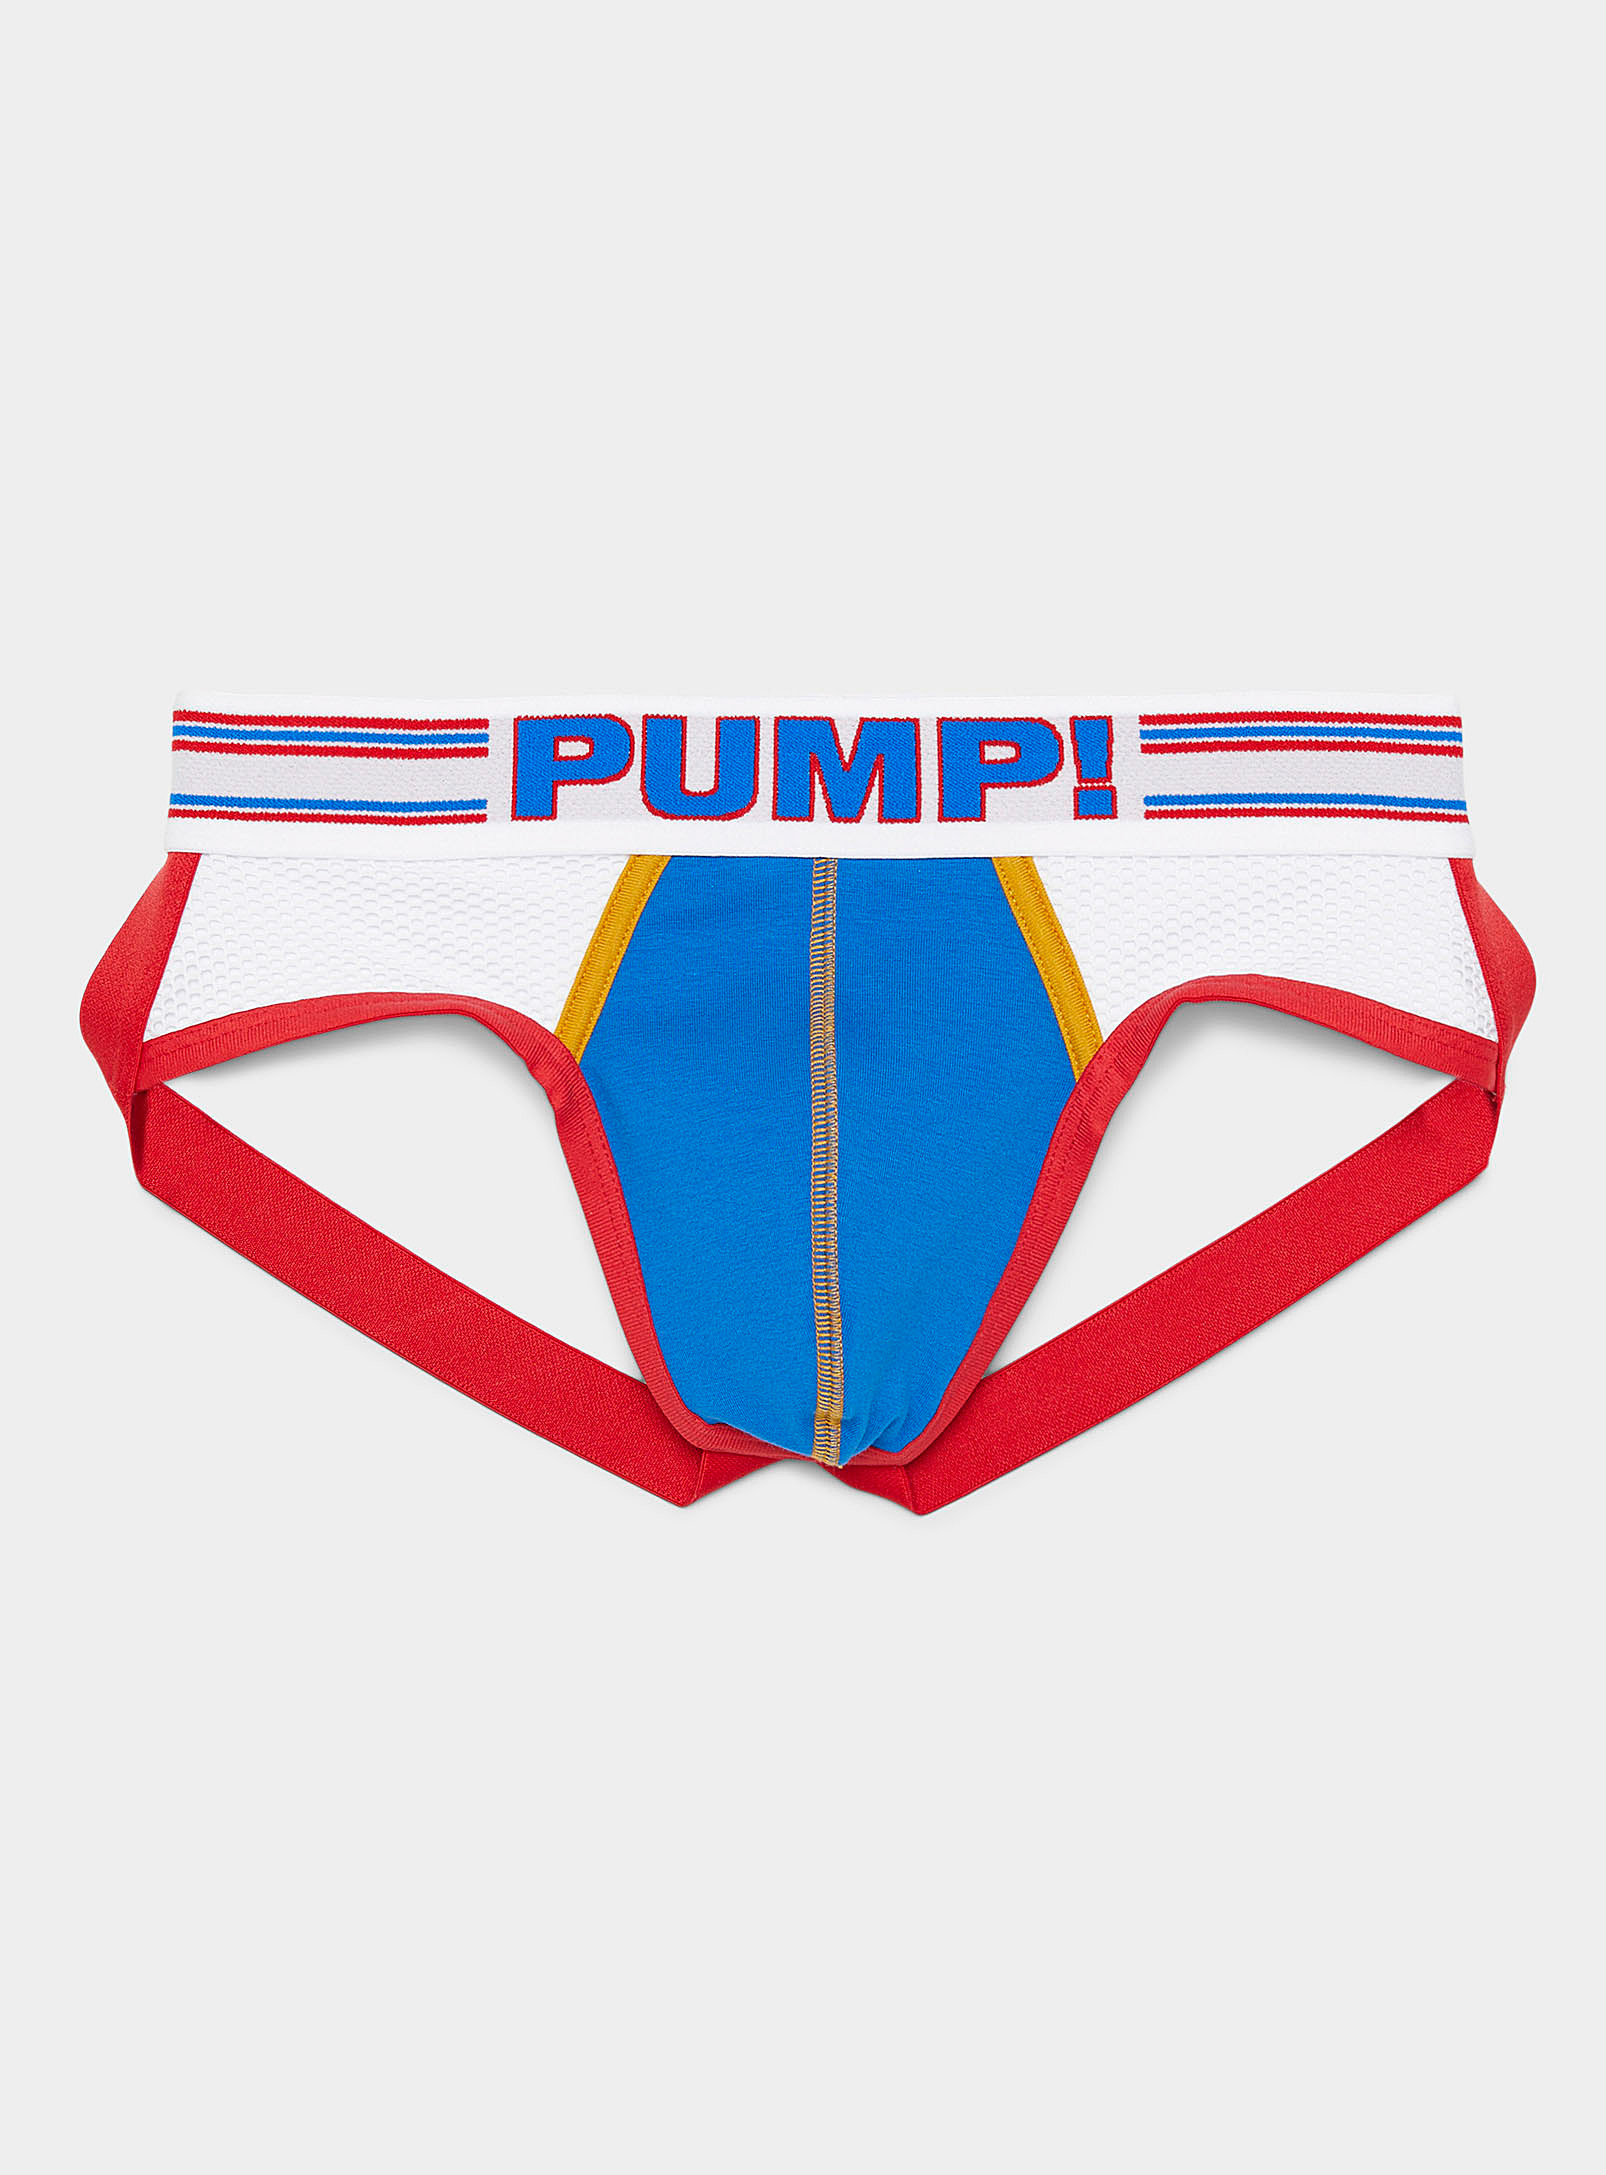 Iconic Logo Waistband Jockstrap by PUMP! Underwear at Clonezone